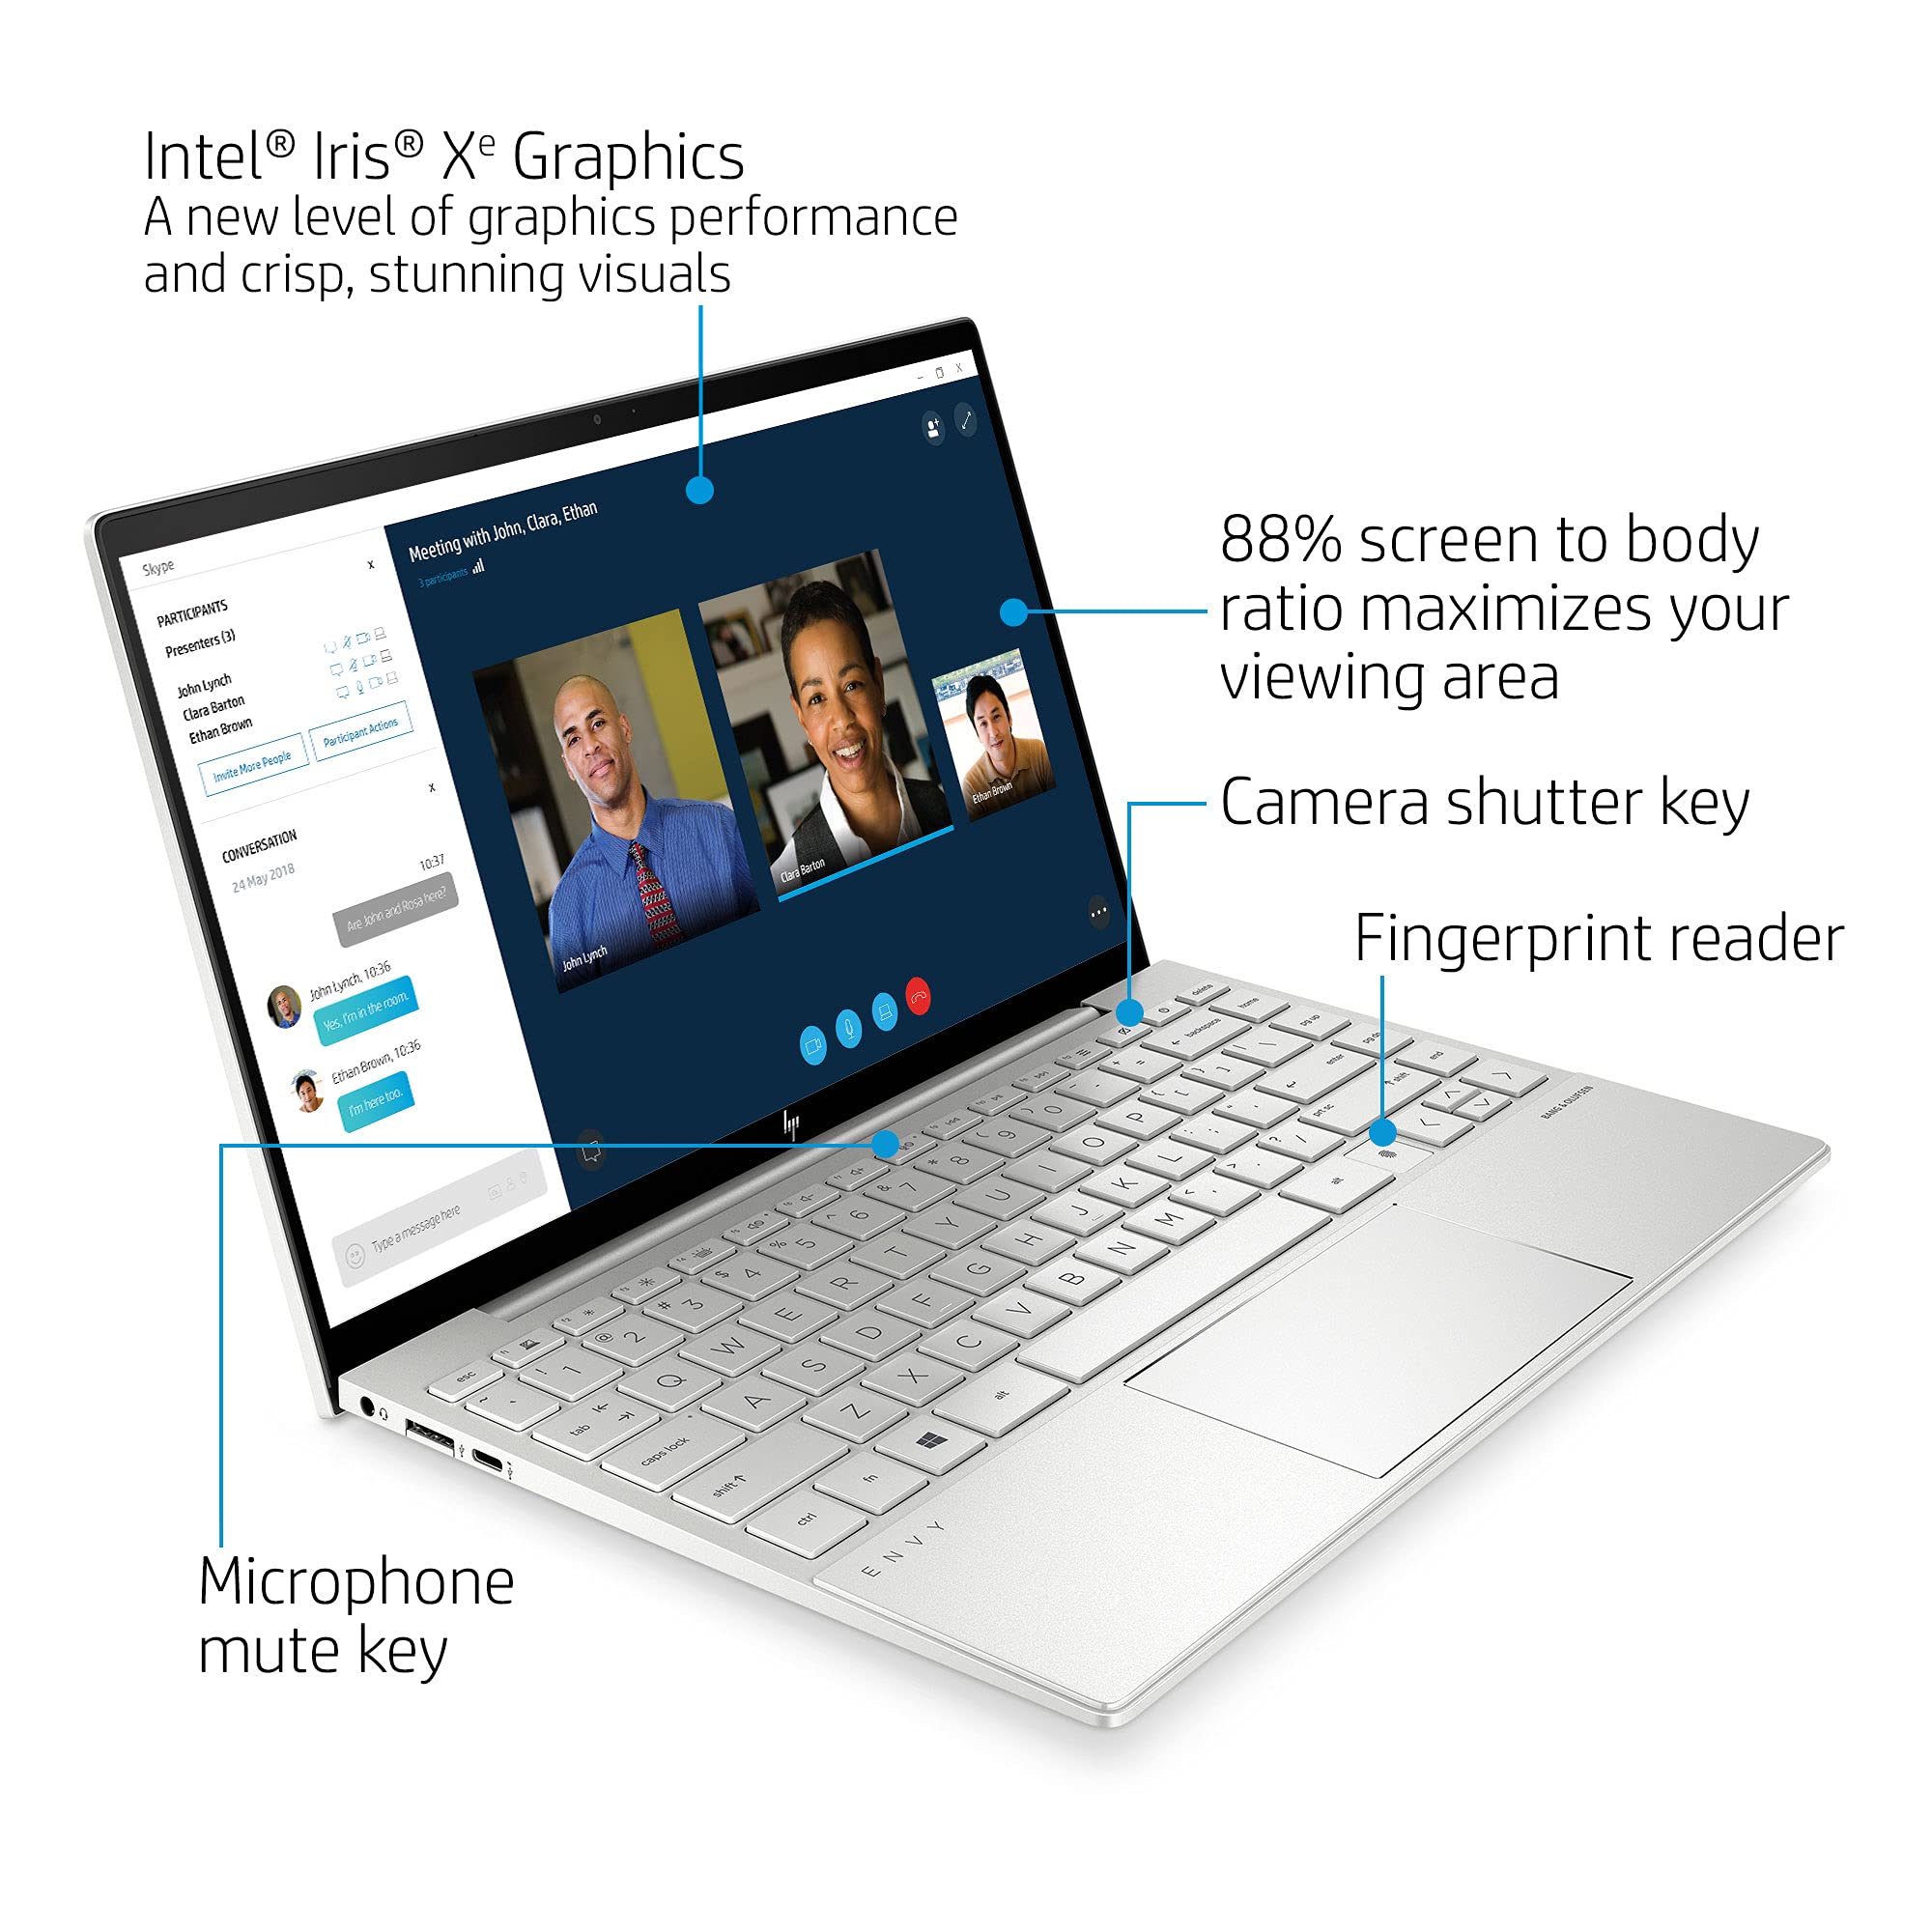 HP 2021 Newest Envy Laptop, 13.3" FHD Non-Touch 400nits Display, 11th Gen Intel Core i5-1135G7 Quad-Core Processor, 8GB RAM, 1TB PCIe NVMe SSD, Wi-Fi, Webcam, Windows 10 Home, Silver